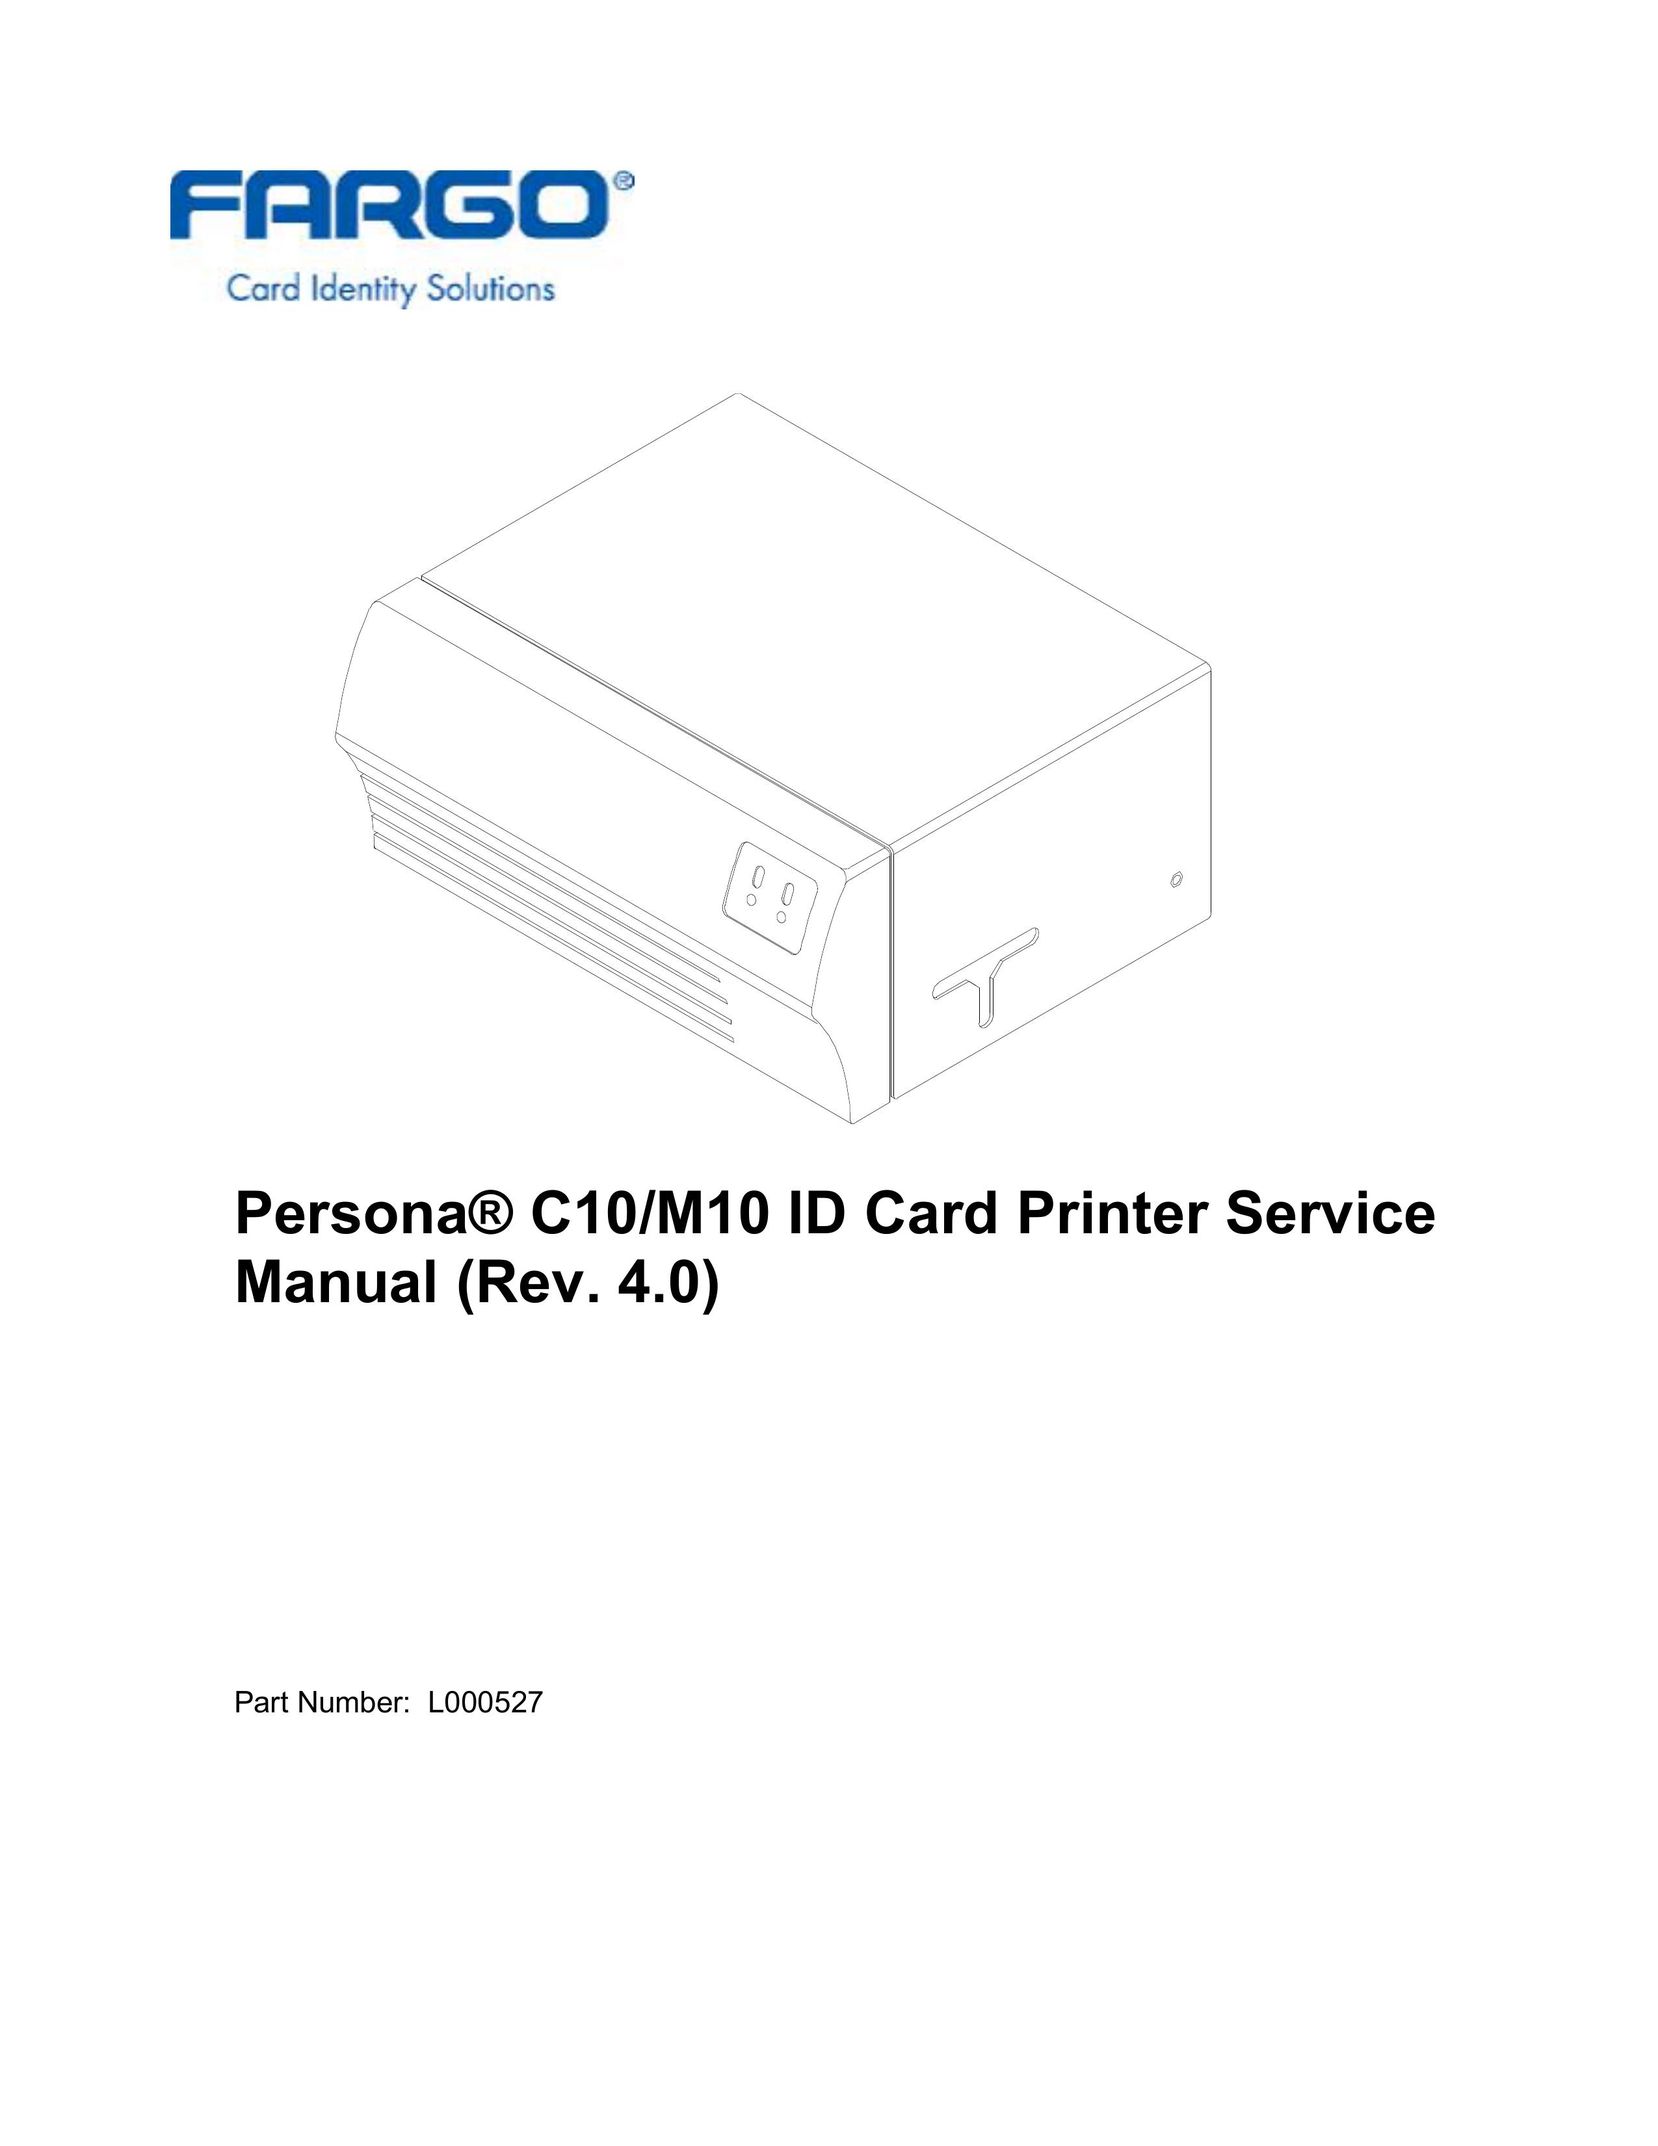 FARGO electronic C10 Printer User Manual